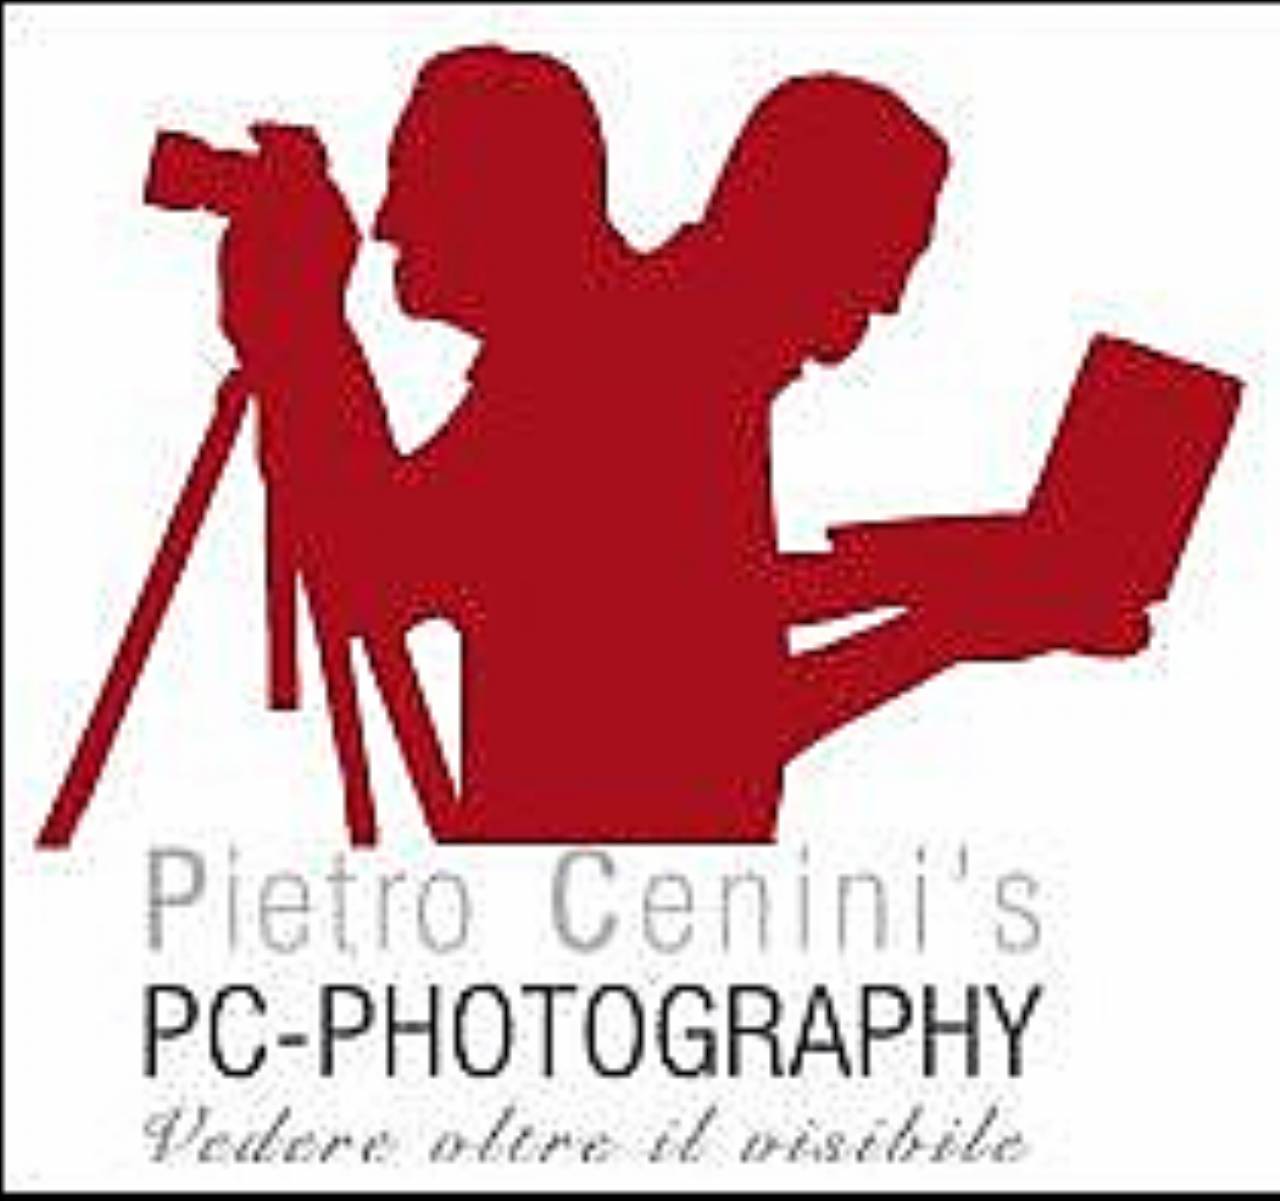 PC-Photography